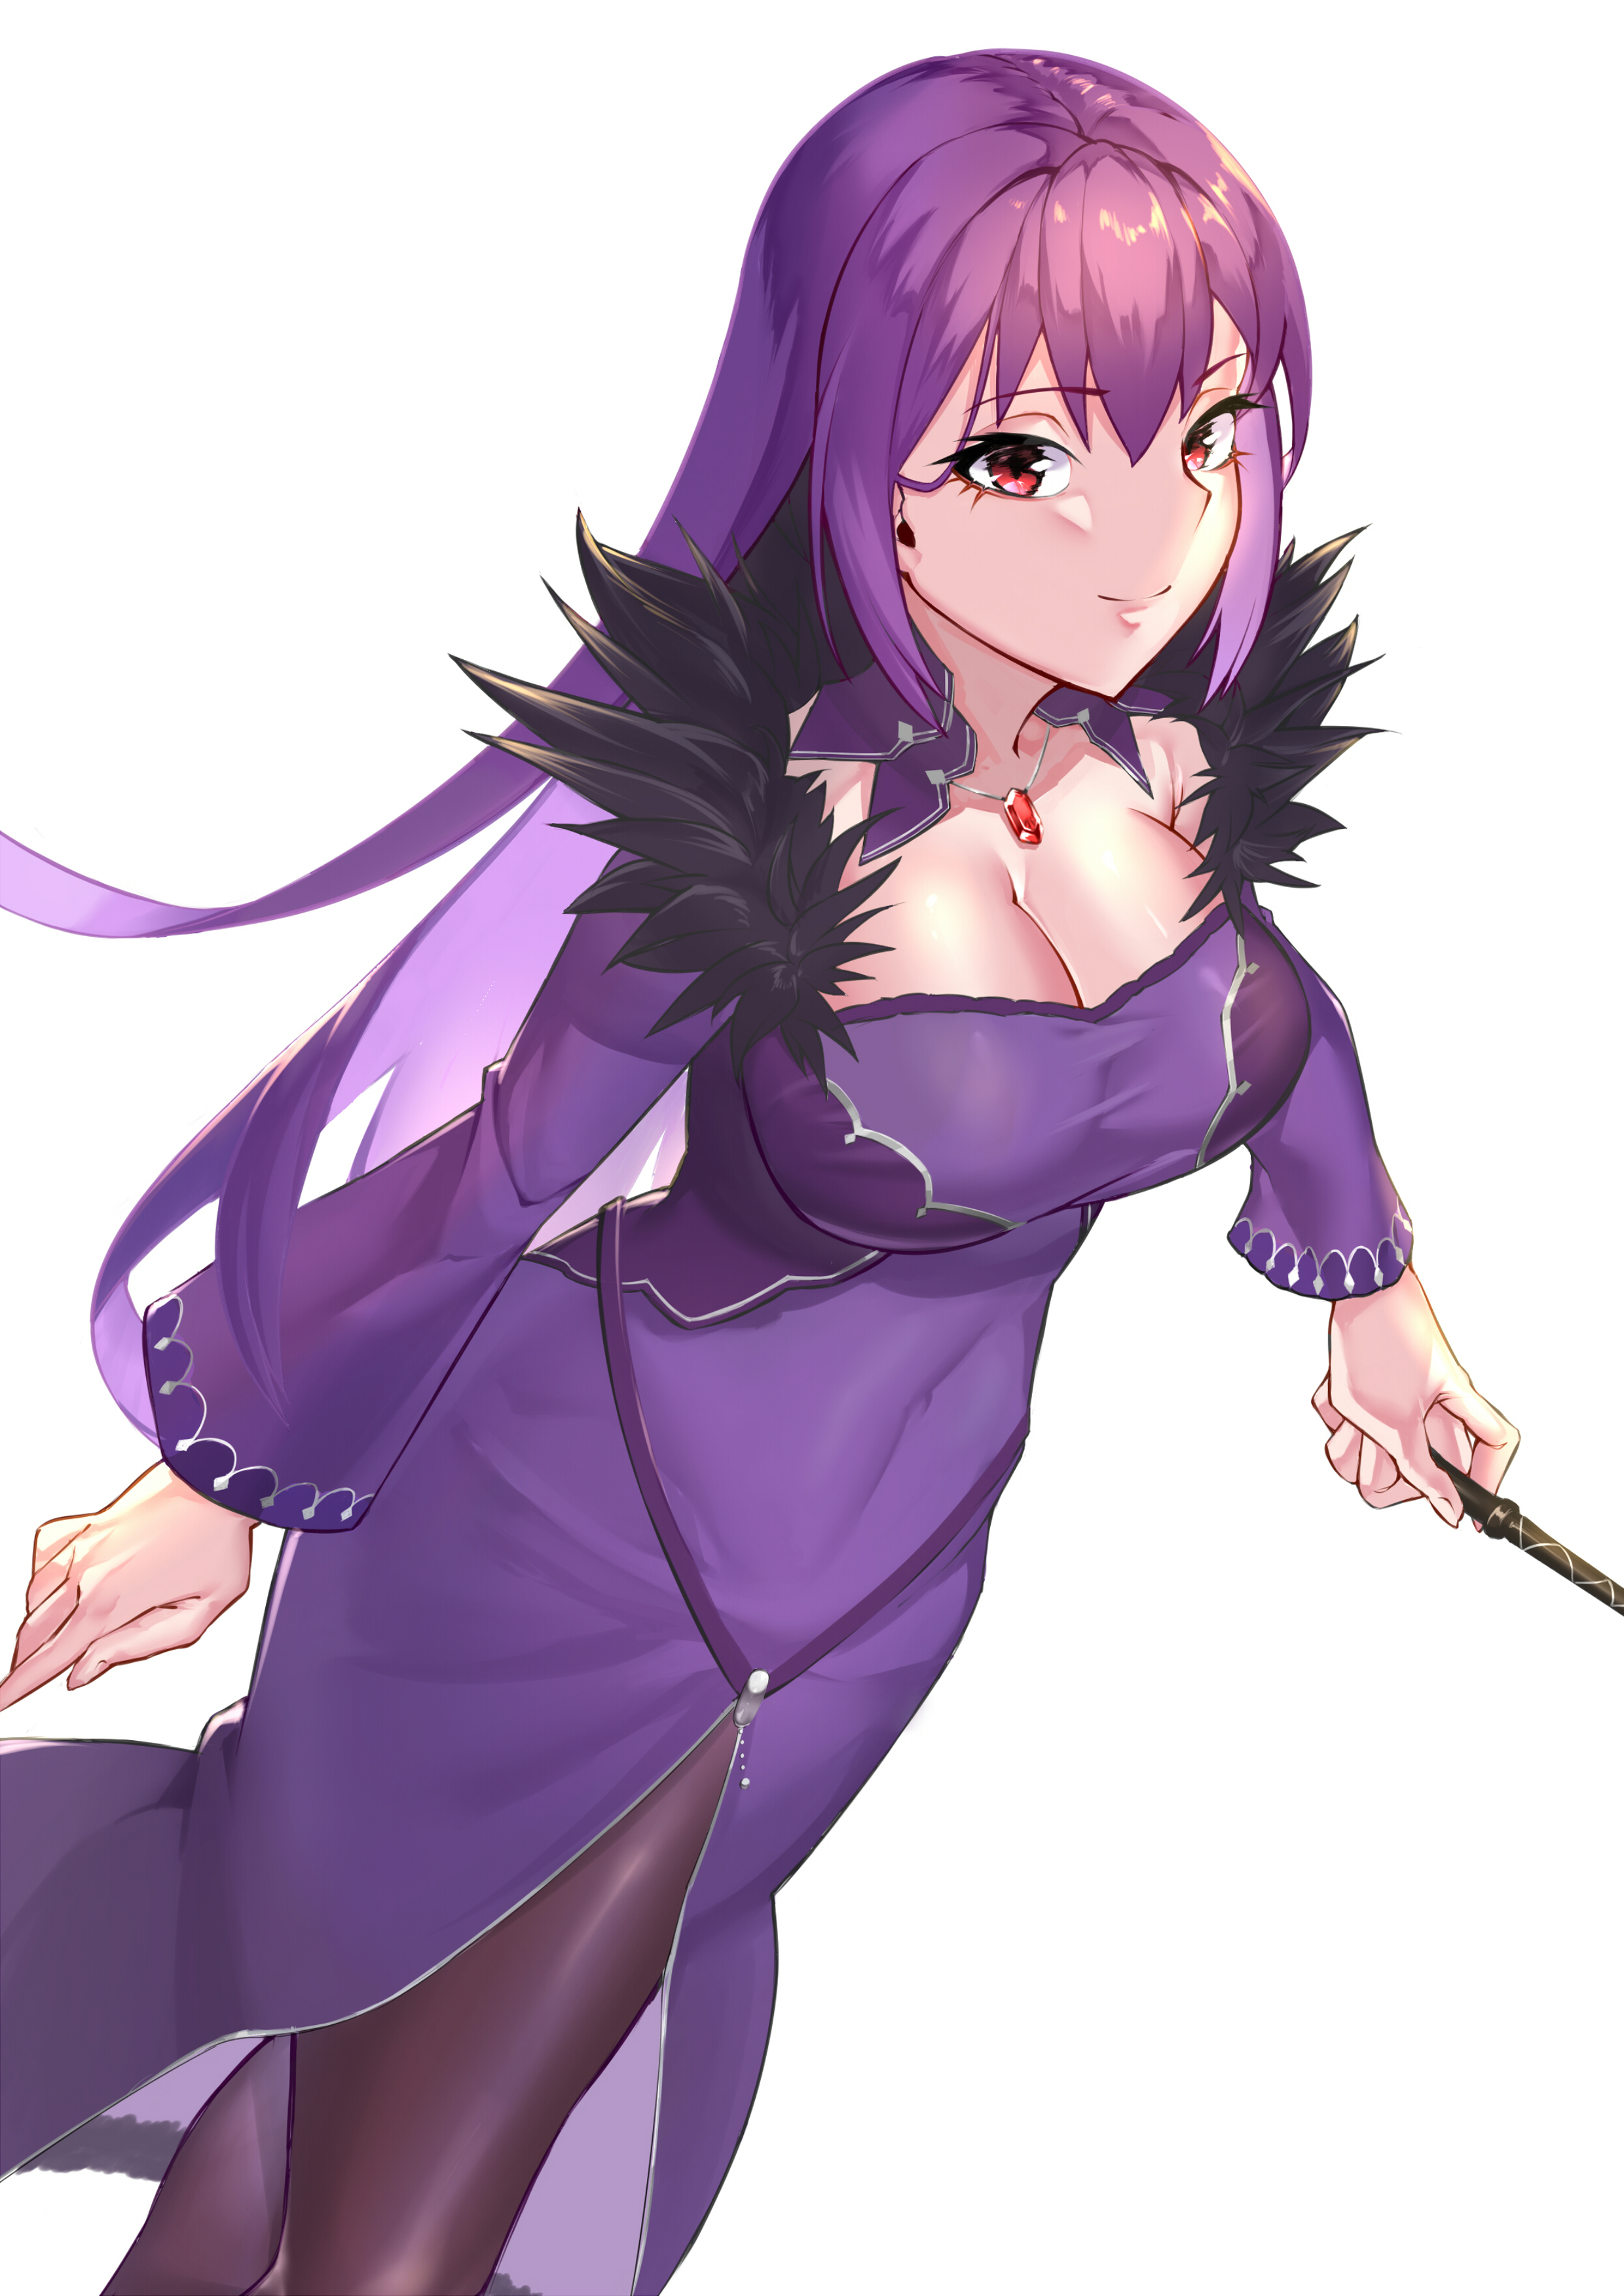 Anime 2480x3507 anime anime girls Fate series Fate/Grand Order Scathach Skadi long hair purple hair solo artwork digital art fan art purple eyes cleavage